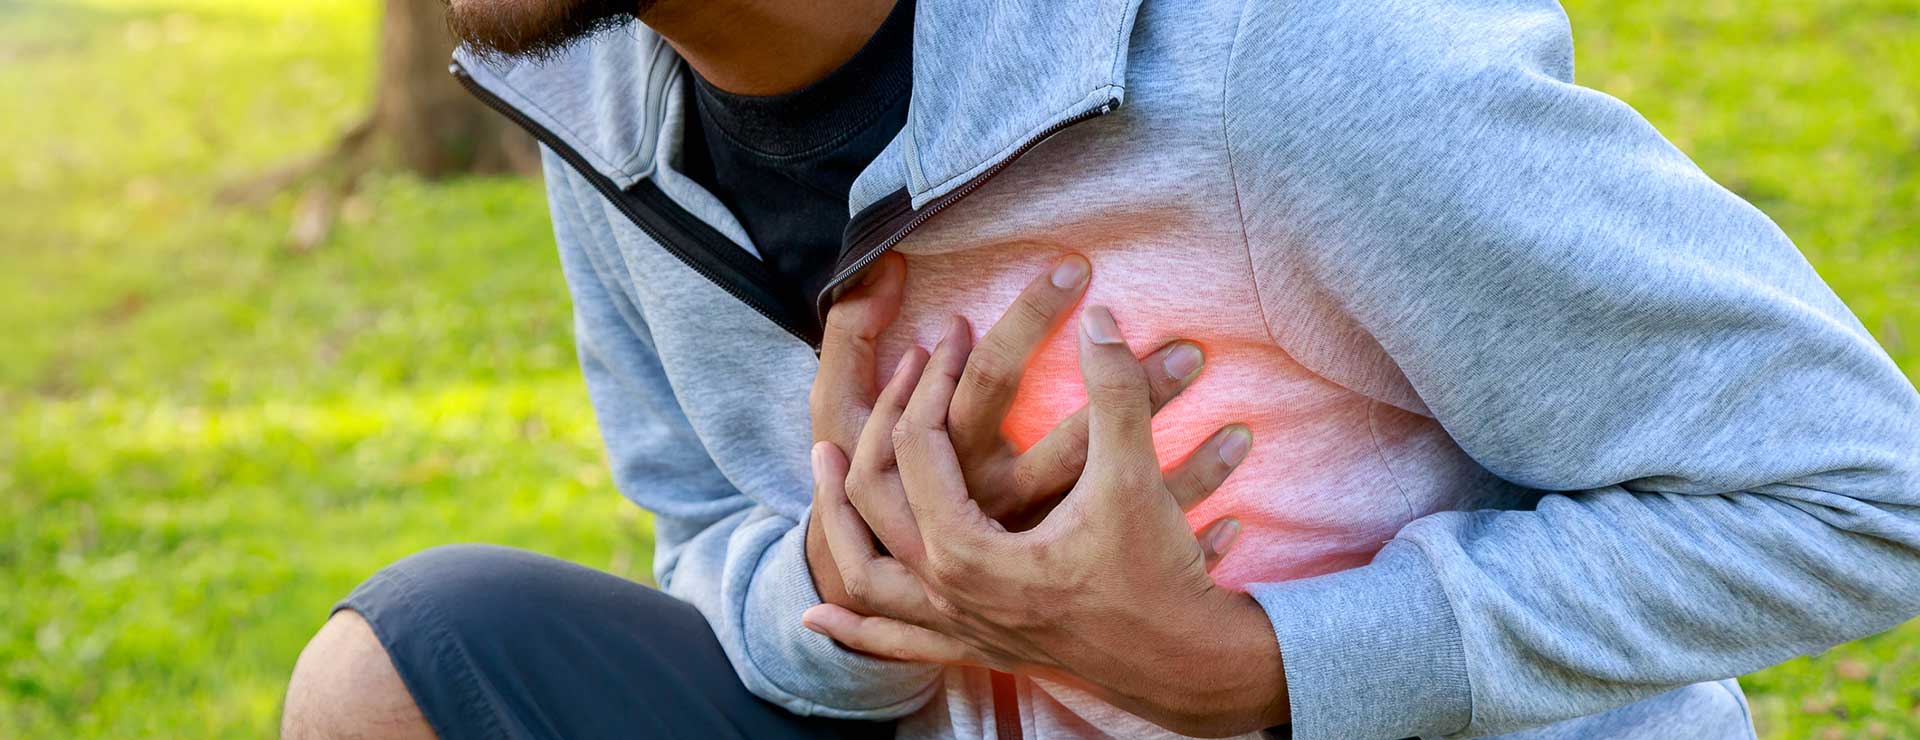 Special Heart Risks for Men | Johns Hopkins Medicine